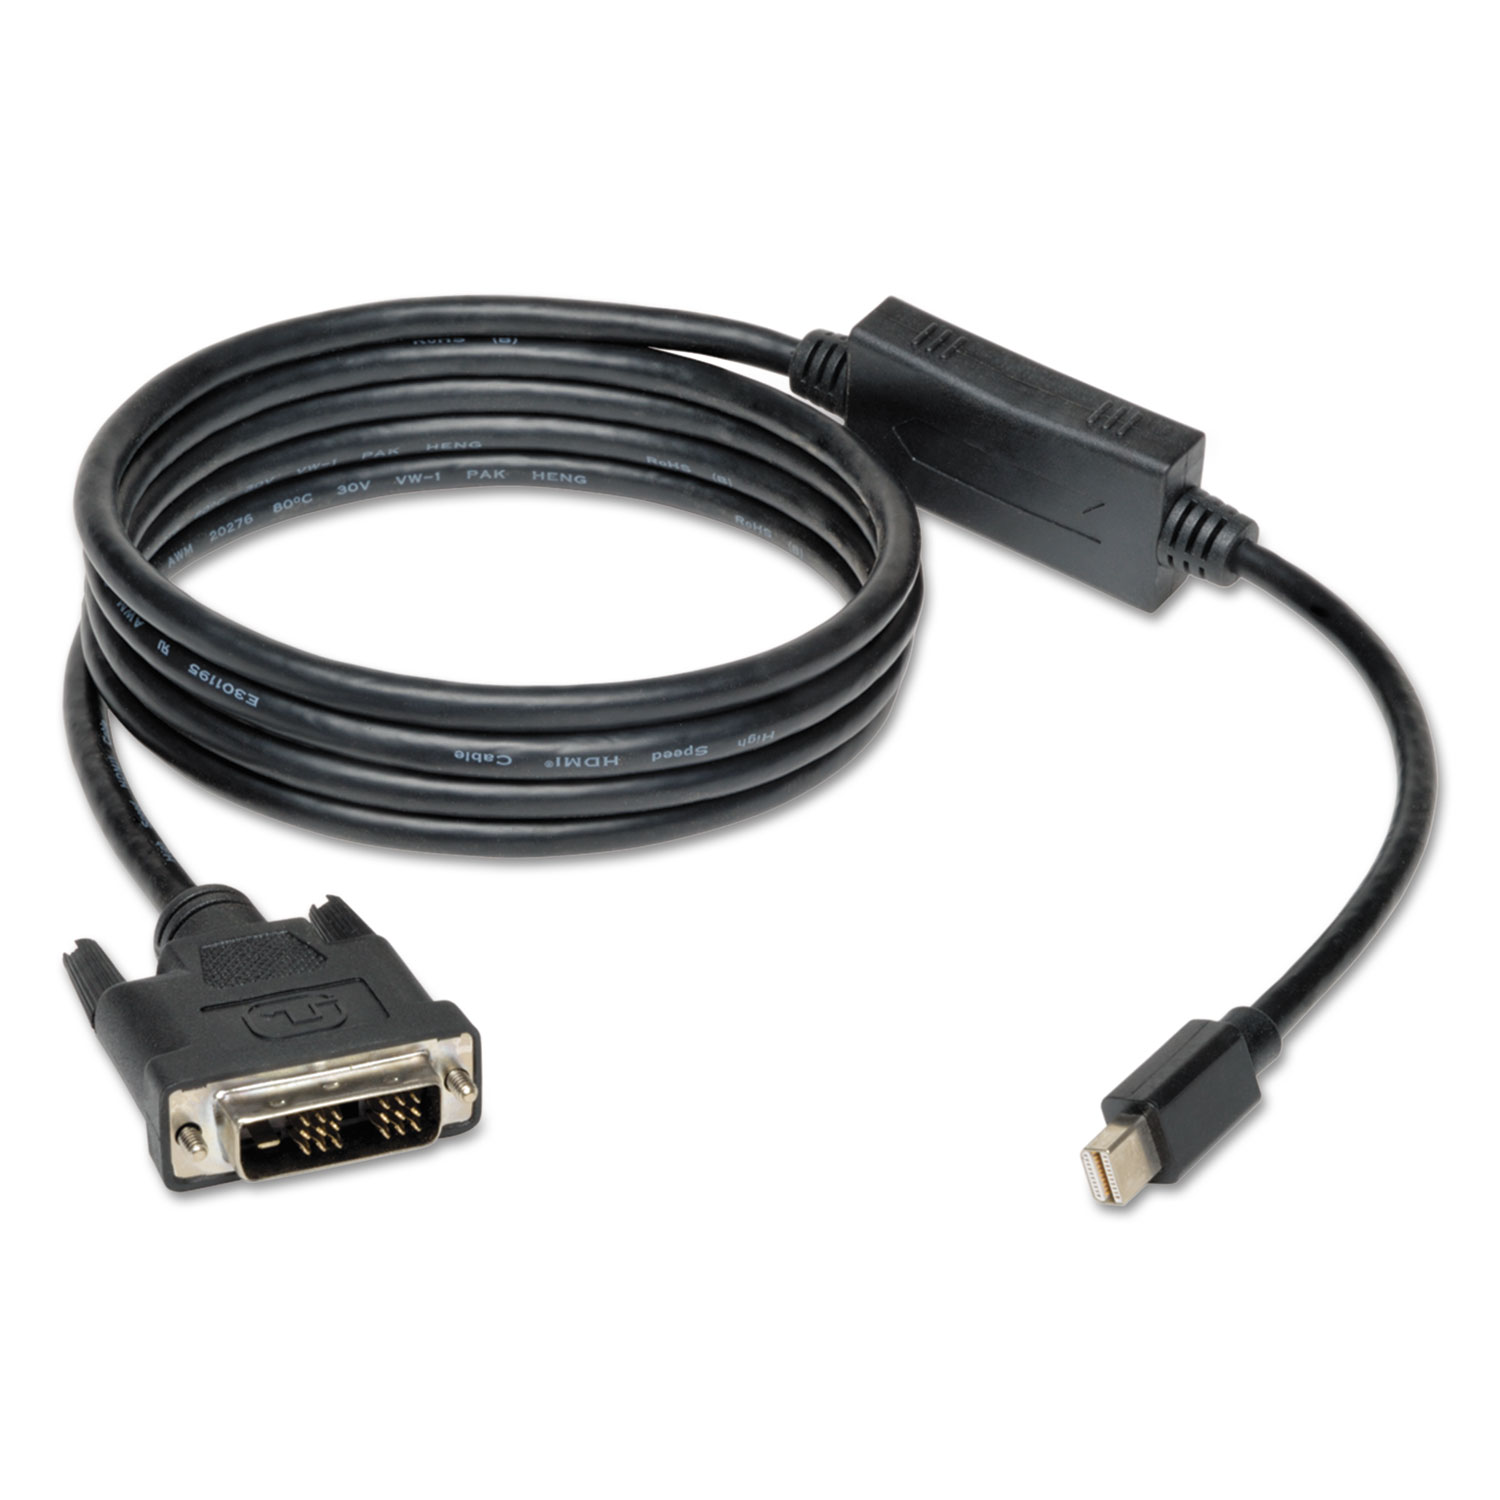  Tripp Lite P586-006-DVI Mini DisplayPort to DVI Cable Adapter (M/M), 6 ft. (TRPP586006DVI) 